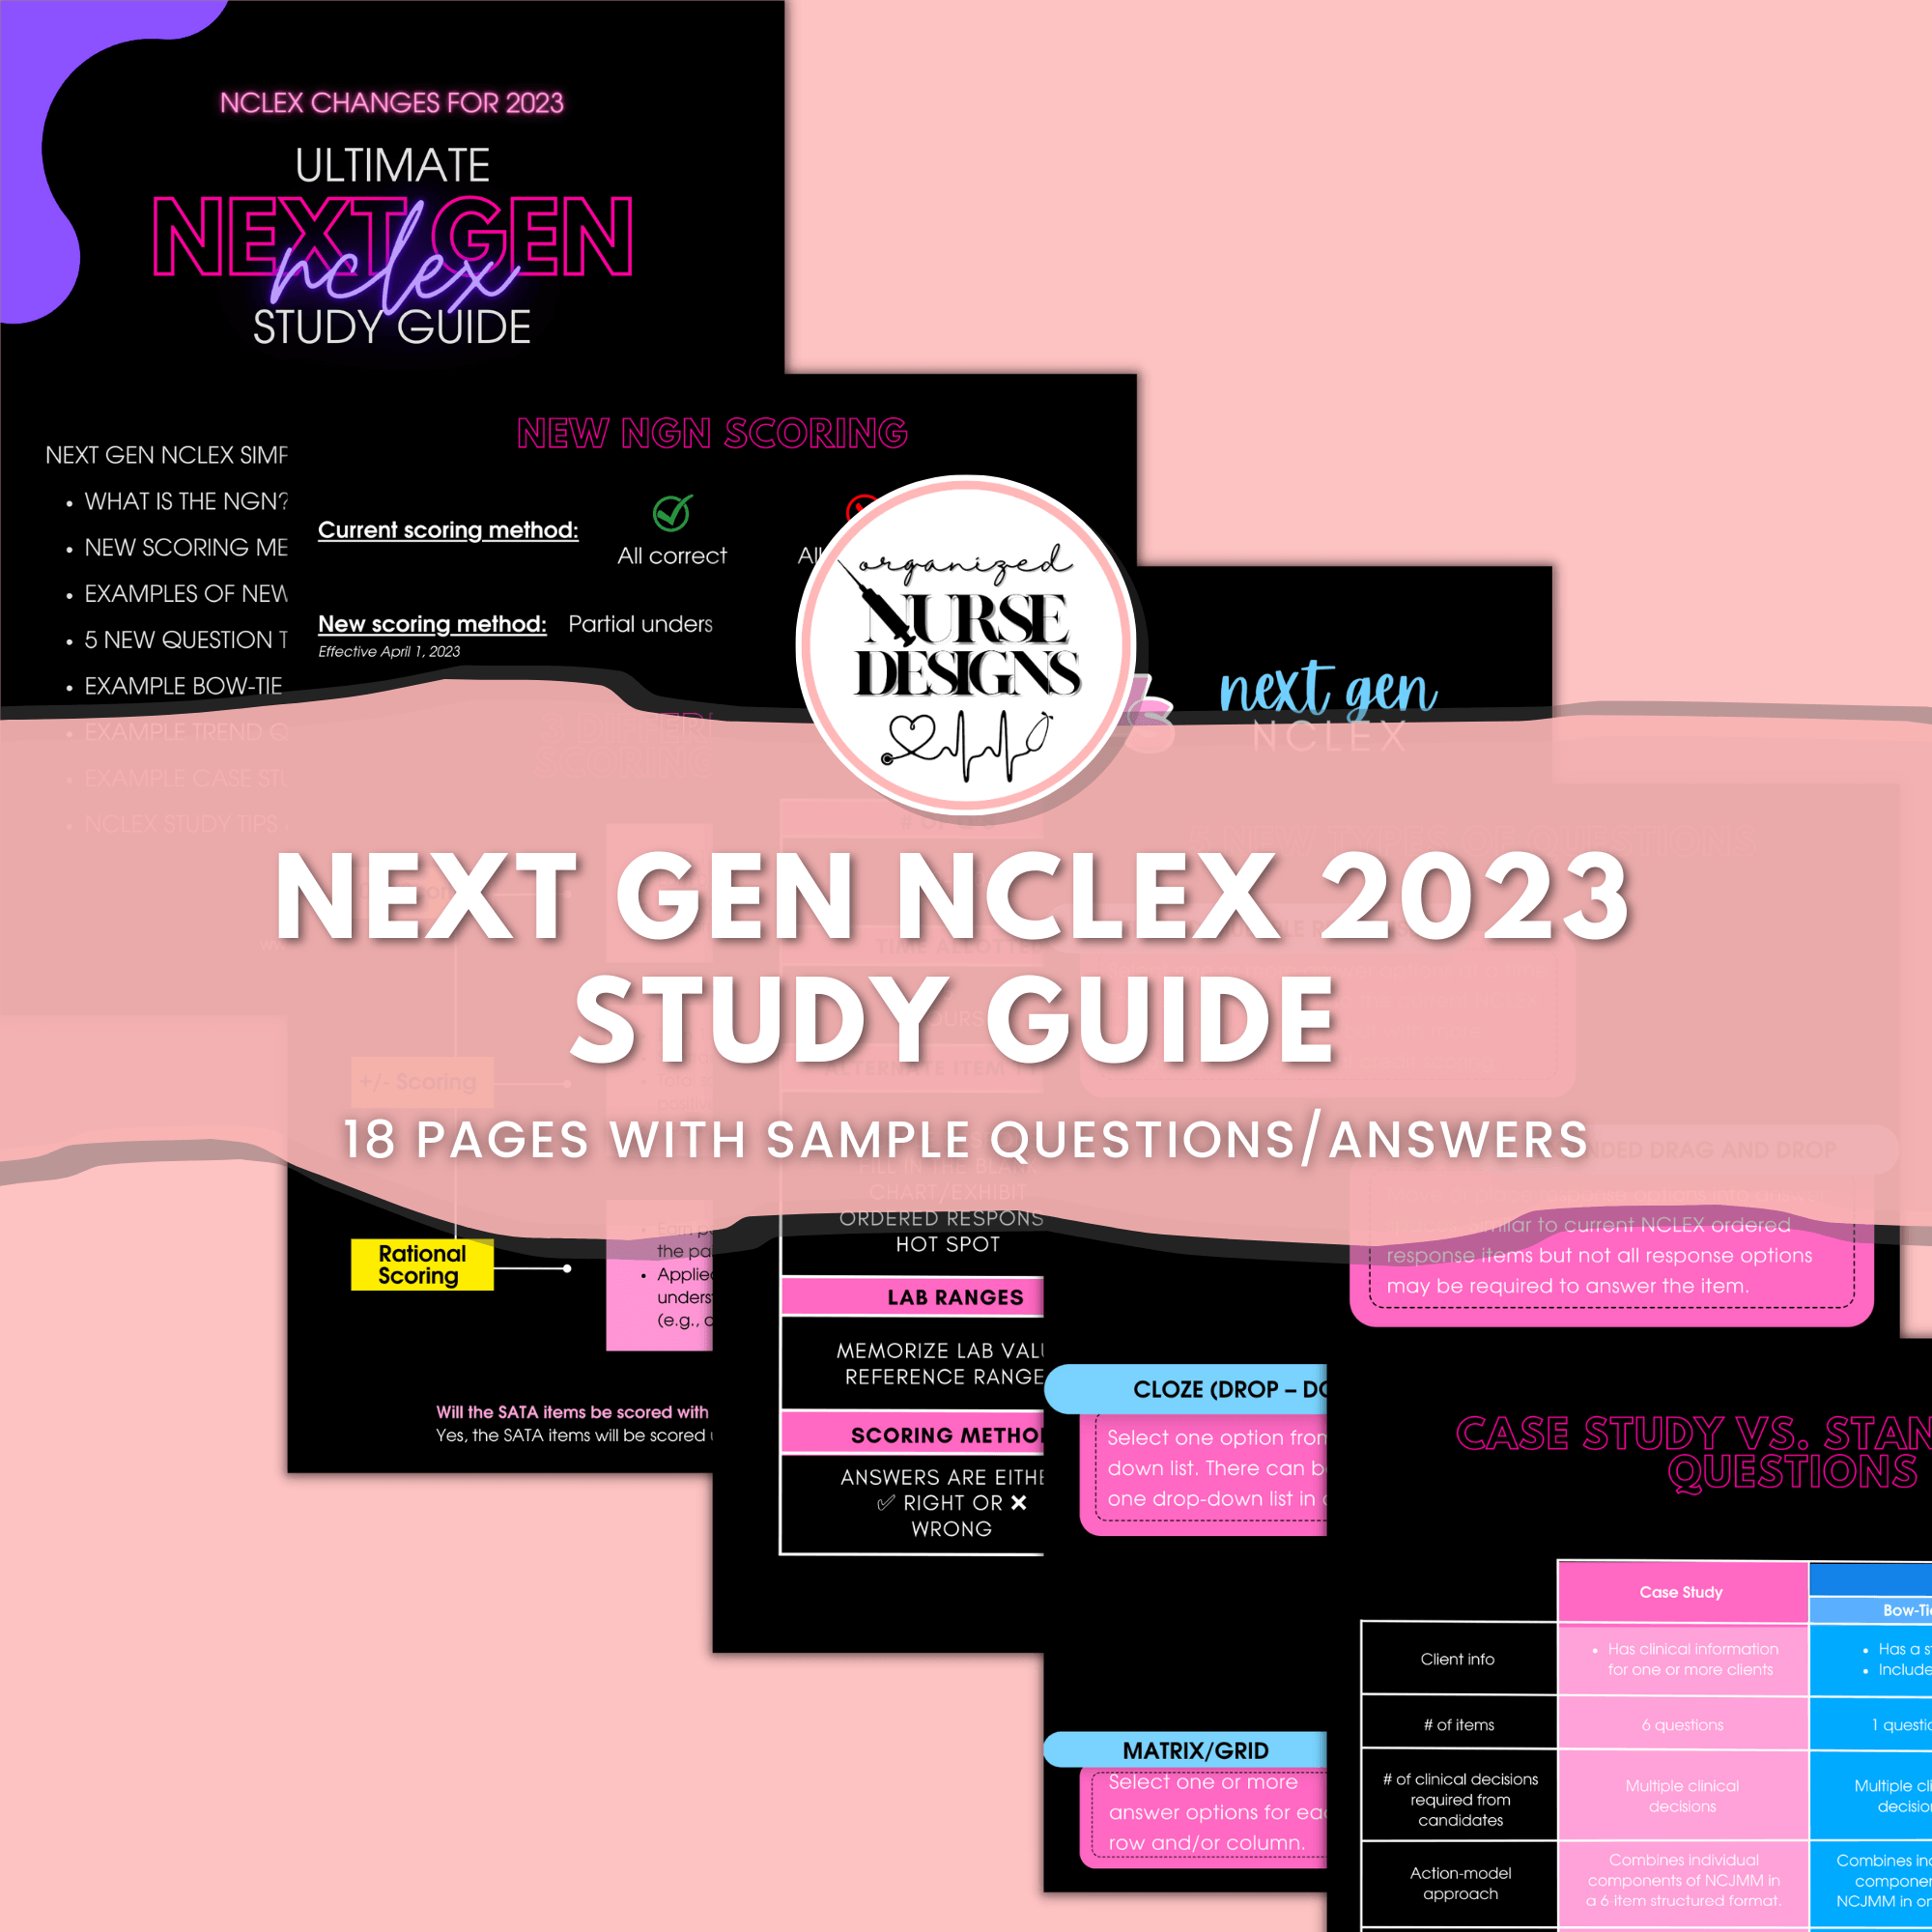 Next Gen NCLEX study guide for nursing students, NCLEX-RN, NCLEX-PN, NCLEX practice questions, nursing school study guide